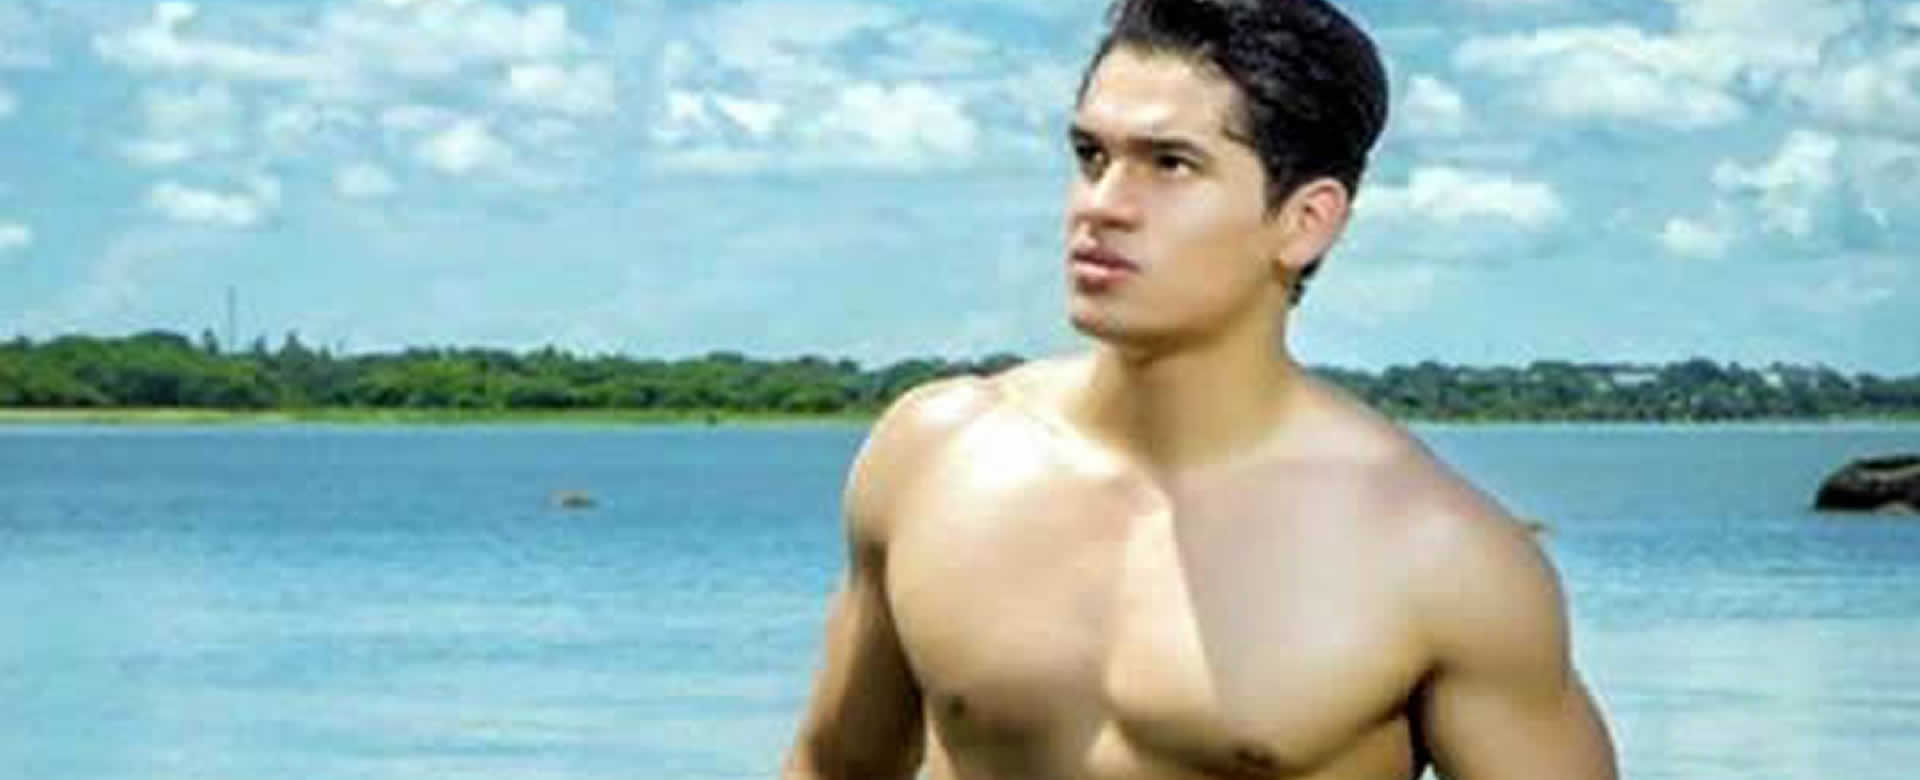 Edson Bonilla, Mister Mundo Nicaragua 2016 ya es papá